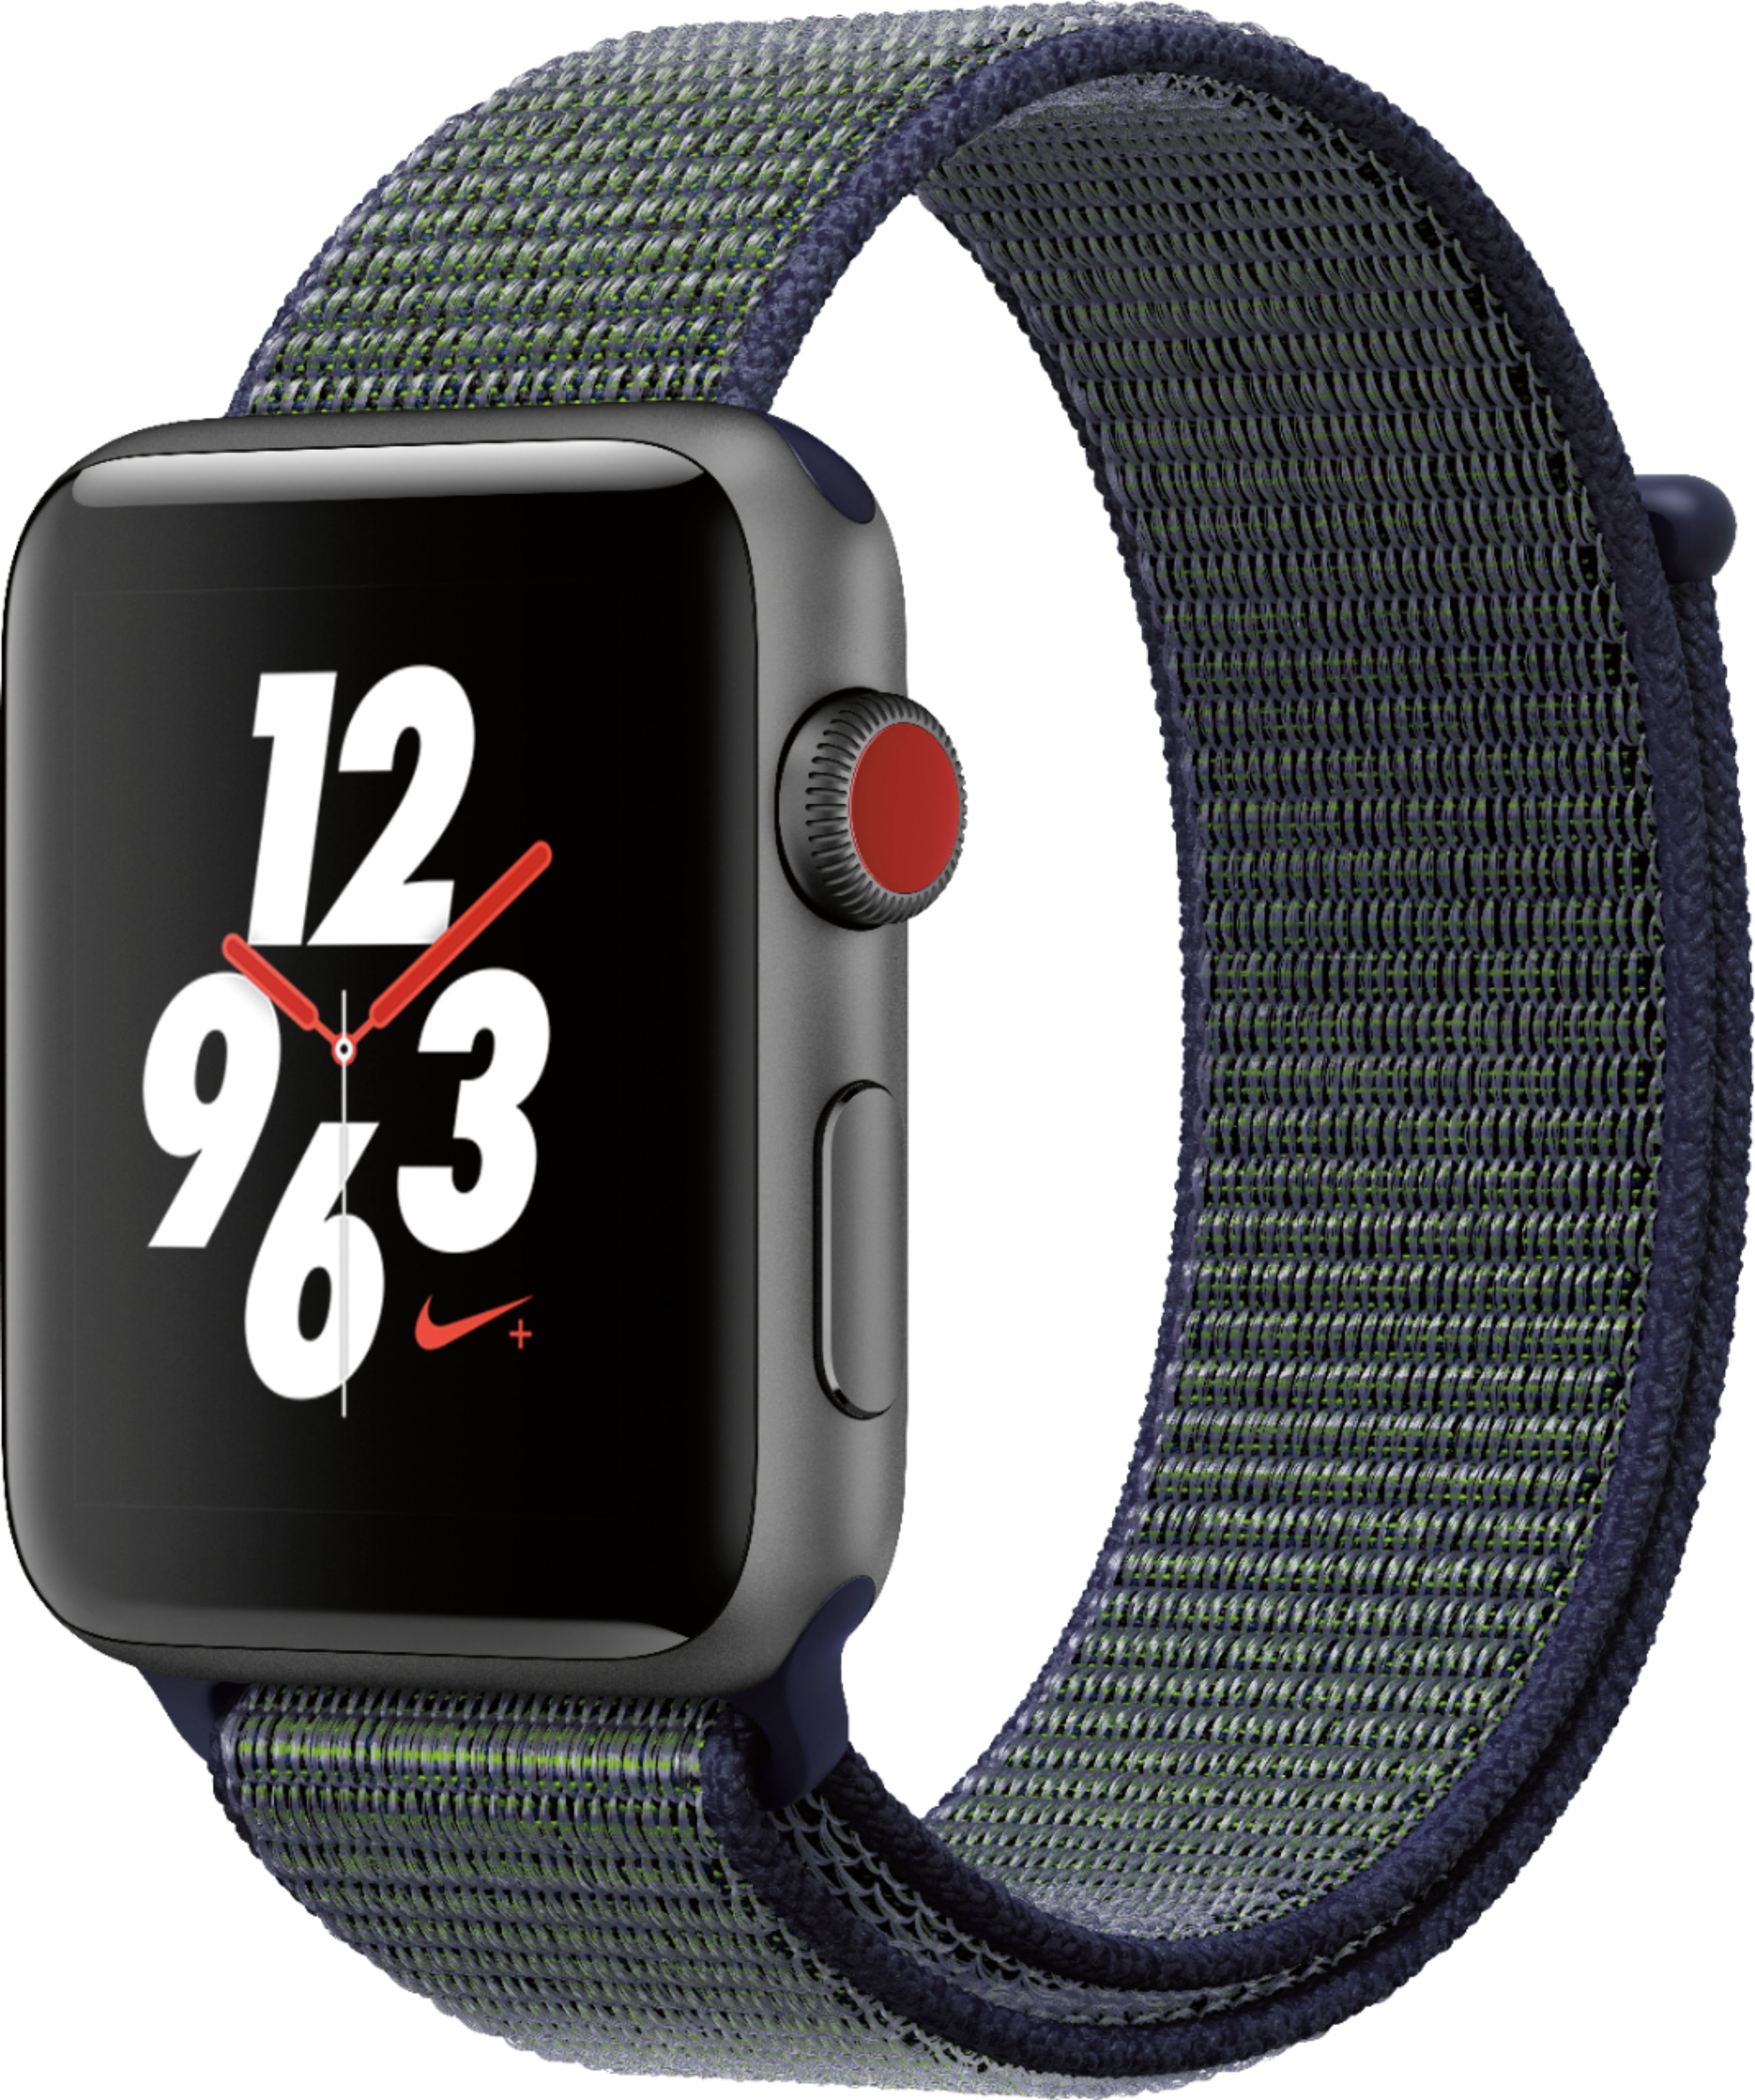 Best Buy: Apple Watch Nike+ Series 3 (GPS + Cellular) 42mm Space